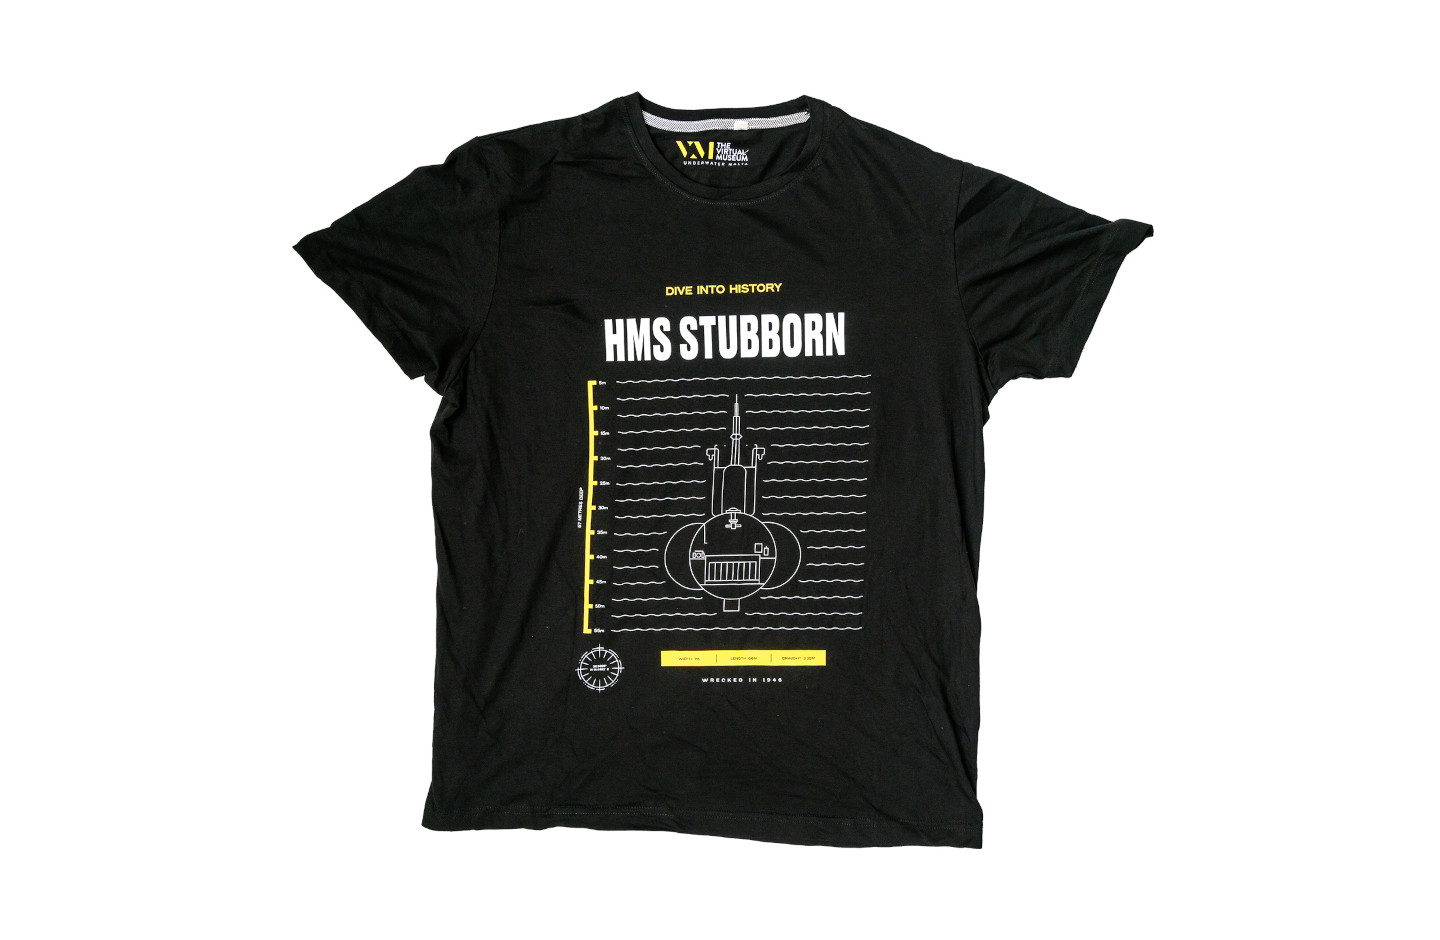 Dive Into History – HMS Stubborn- T-Shirt